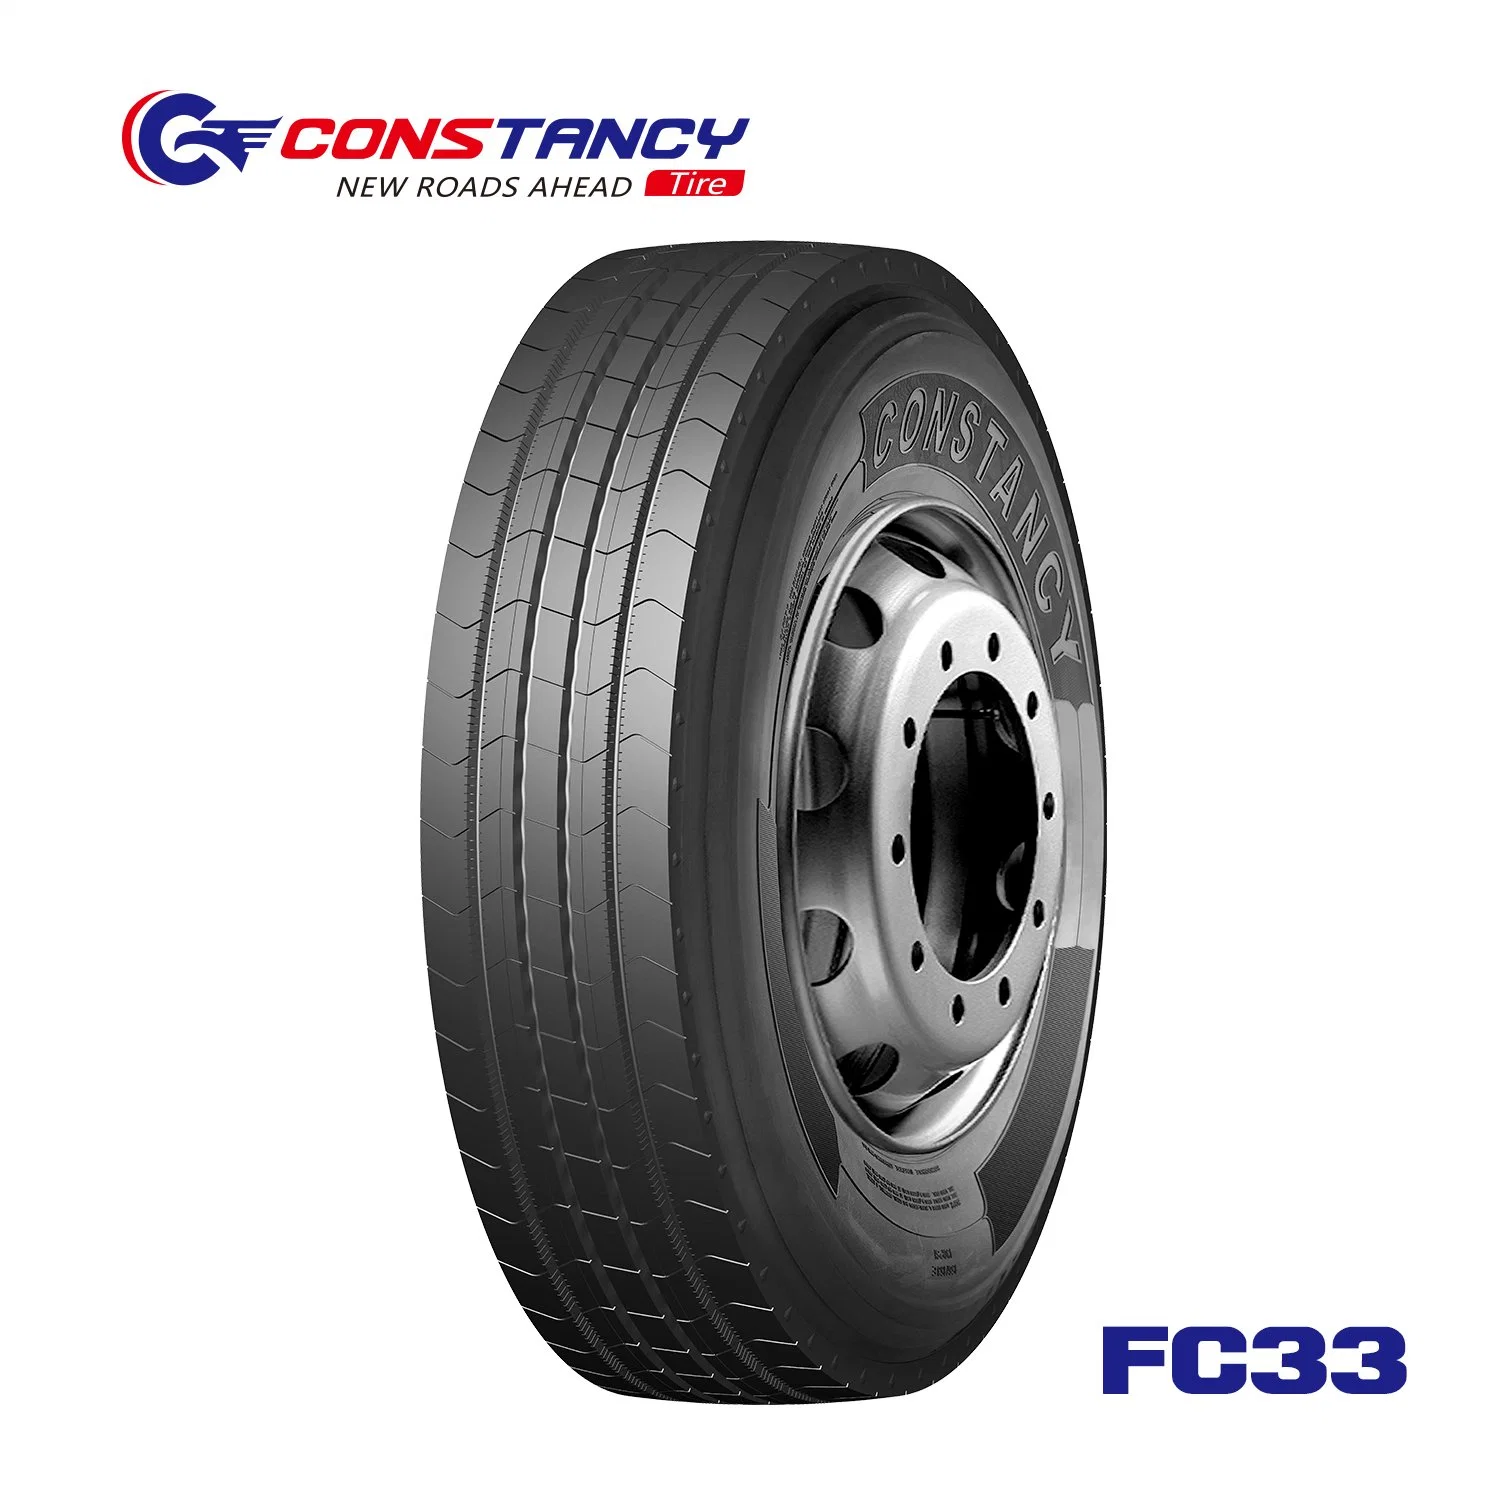 Constancy Brand Truck Tire 215/75r17.5 FC33